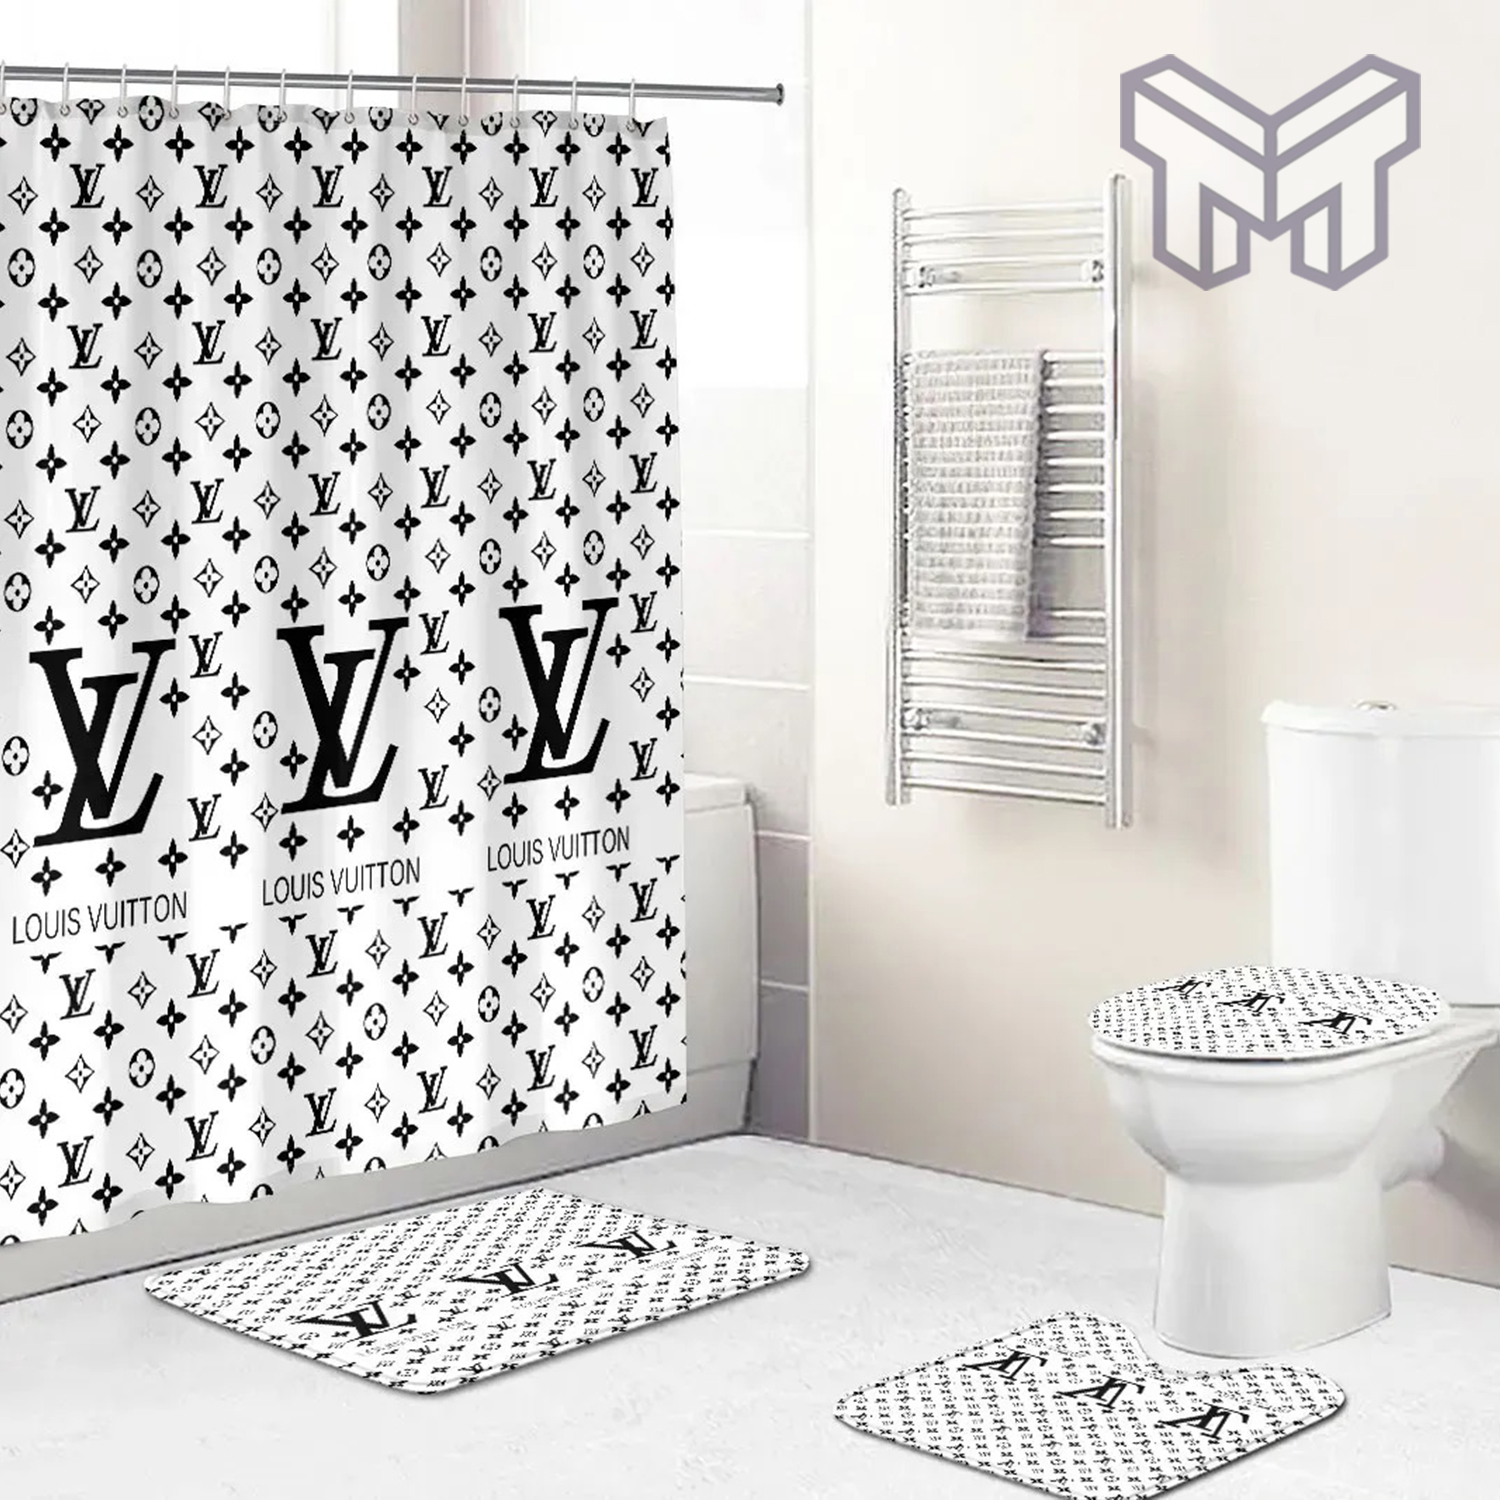 Louis Vuitton Big Logo Monogram In Grey Bathroom Set With Shower Curtain